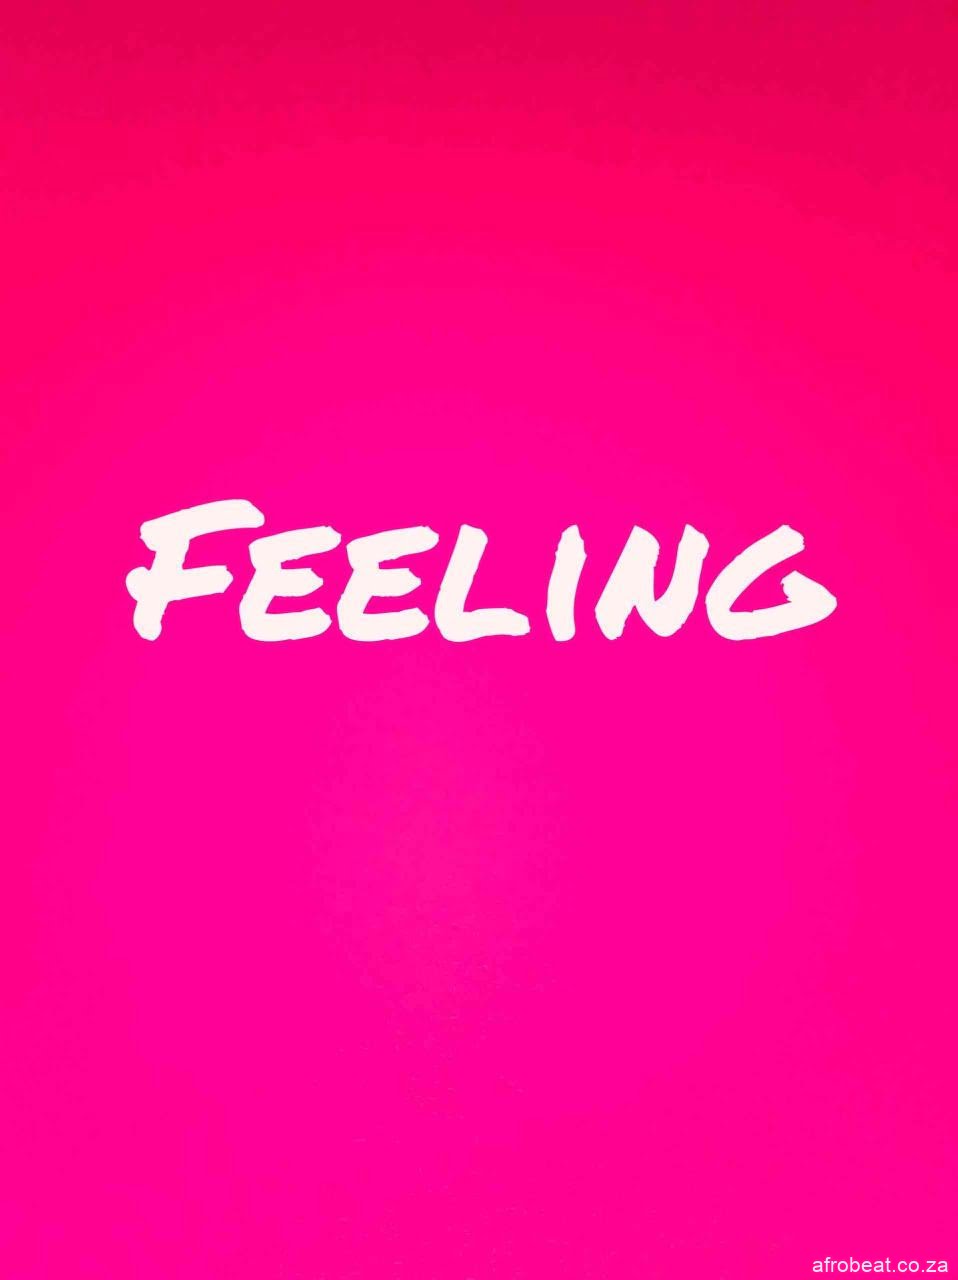 Heculidz Dj – Feeling Joy